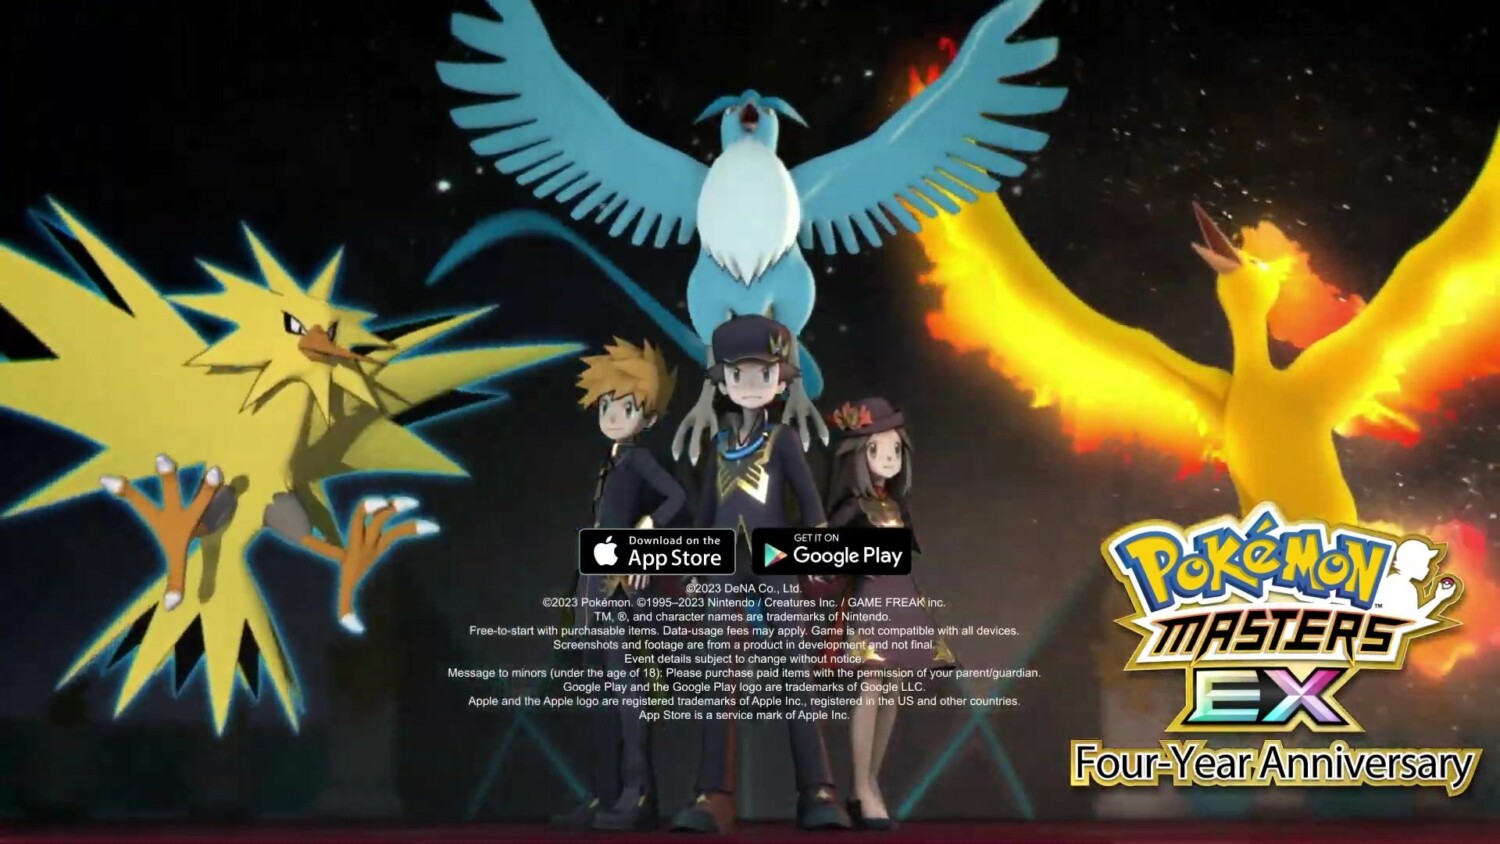 Pokémon Masters EX on the App Store